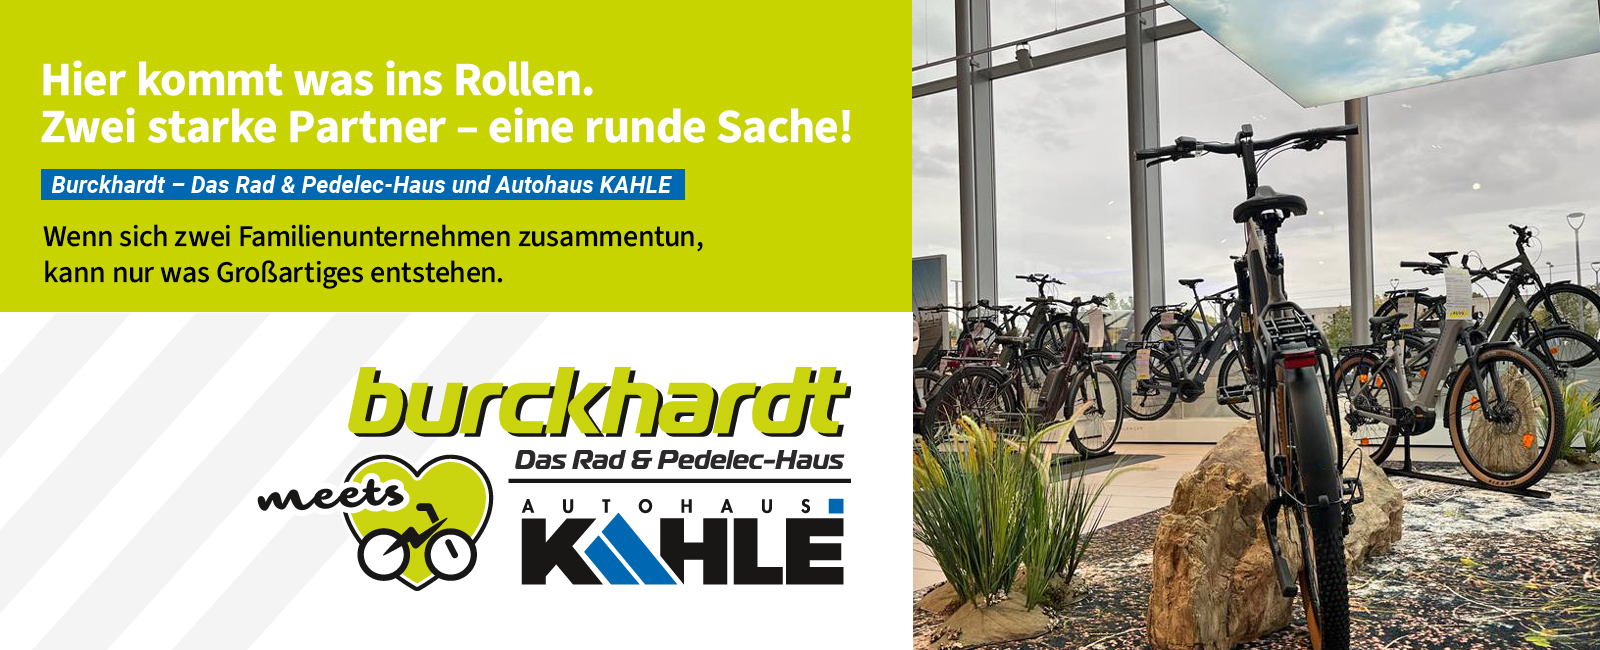 Kooperation von Autohaus Kahle und Fahrrad Burckhardt zum Therma E-Bikes